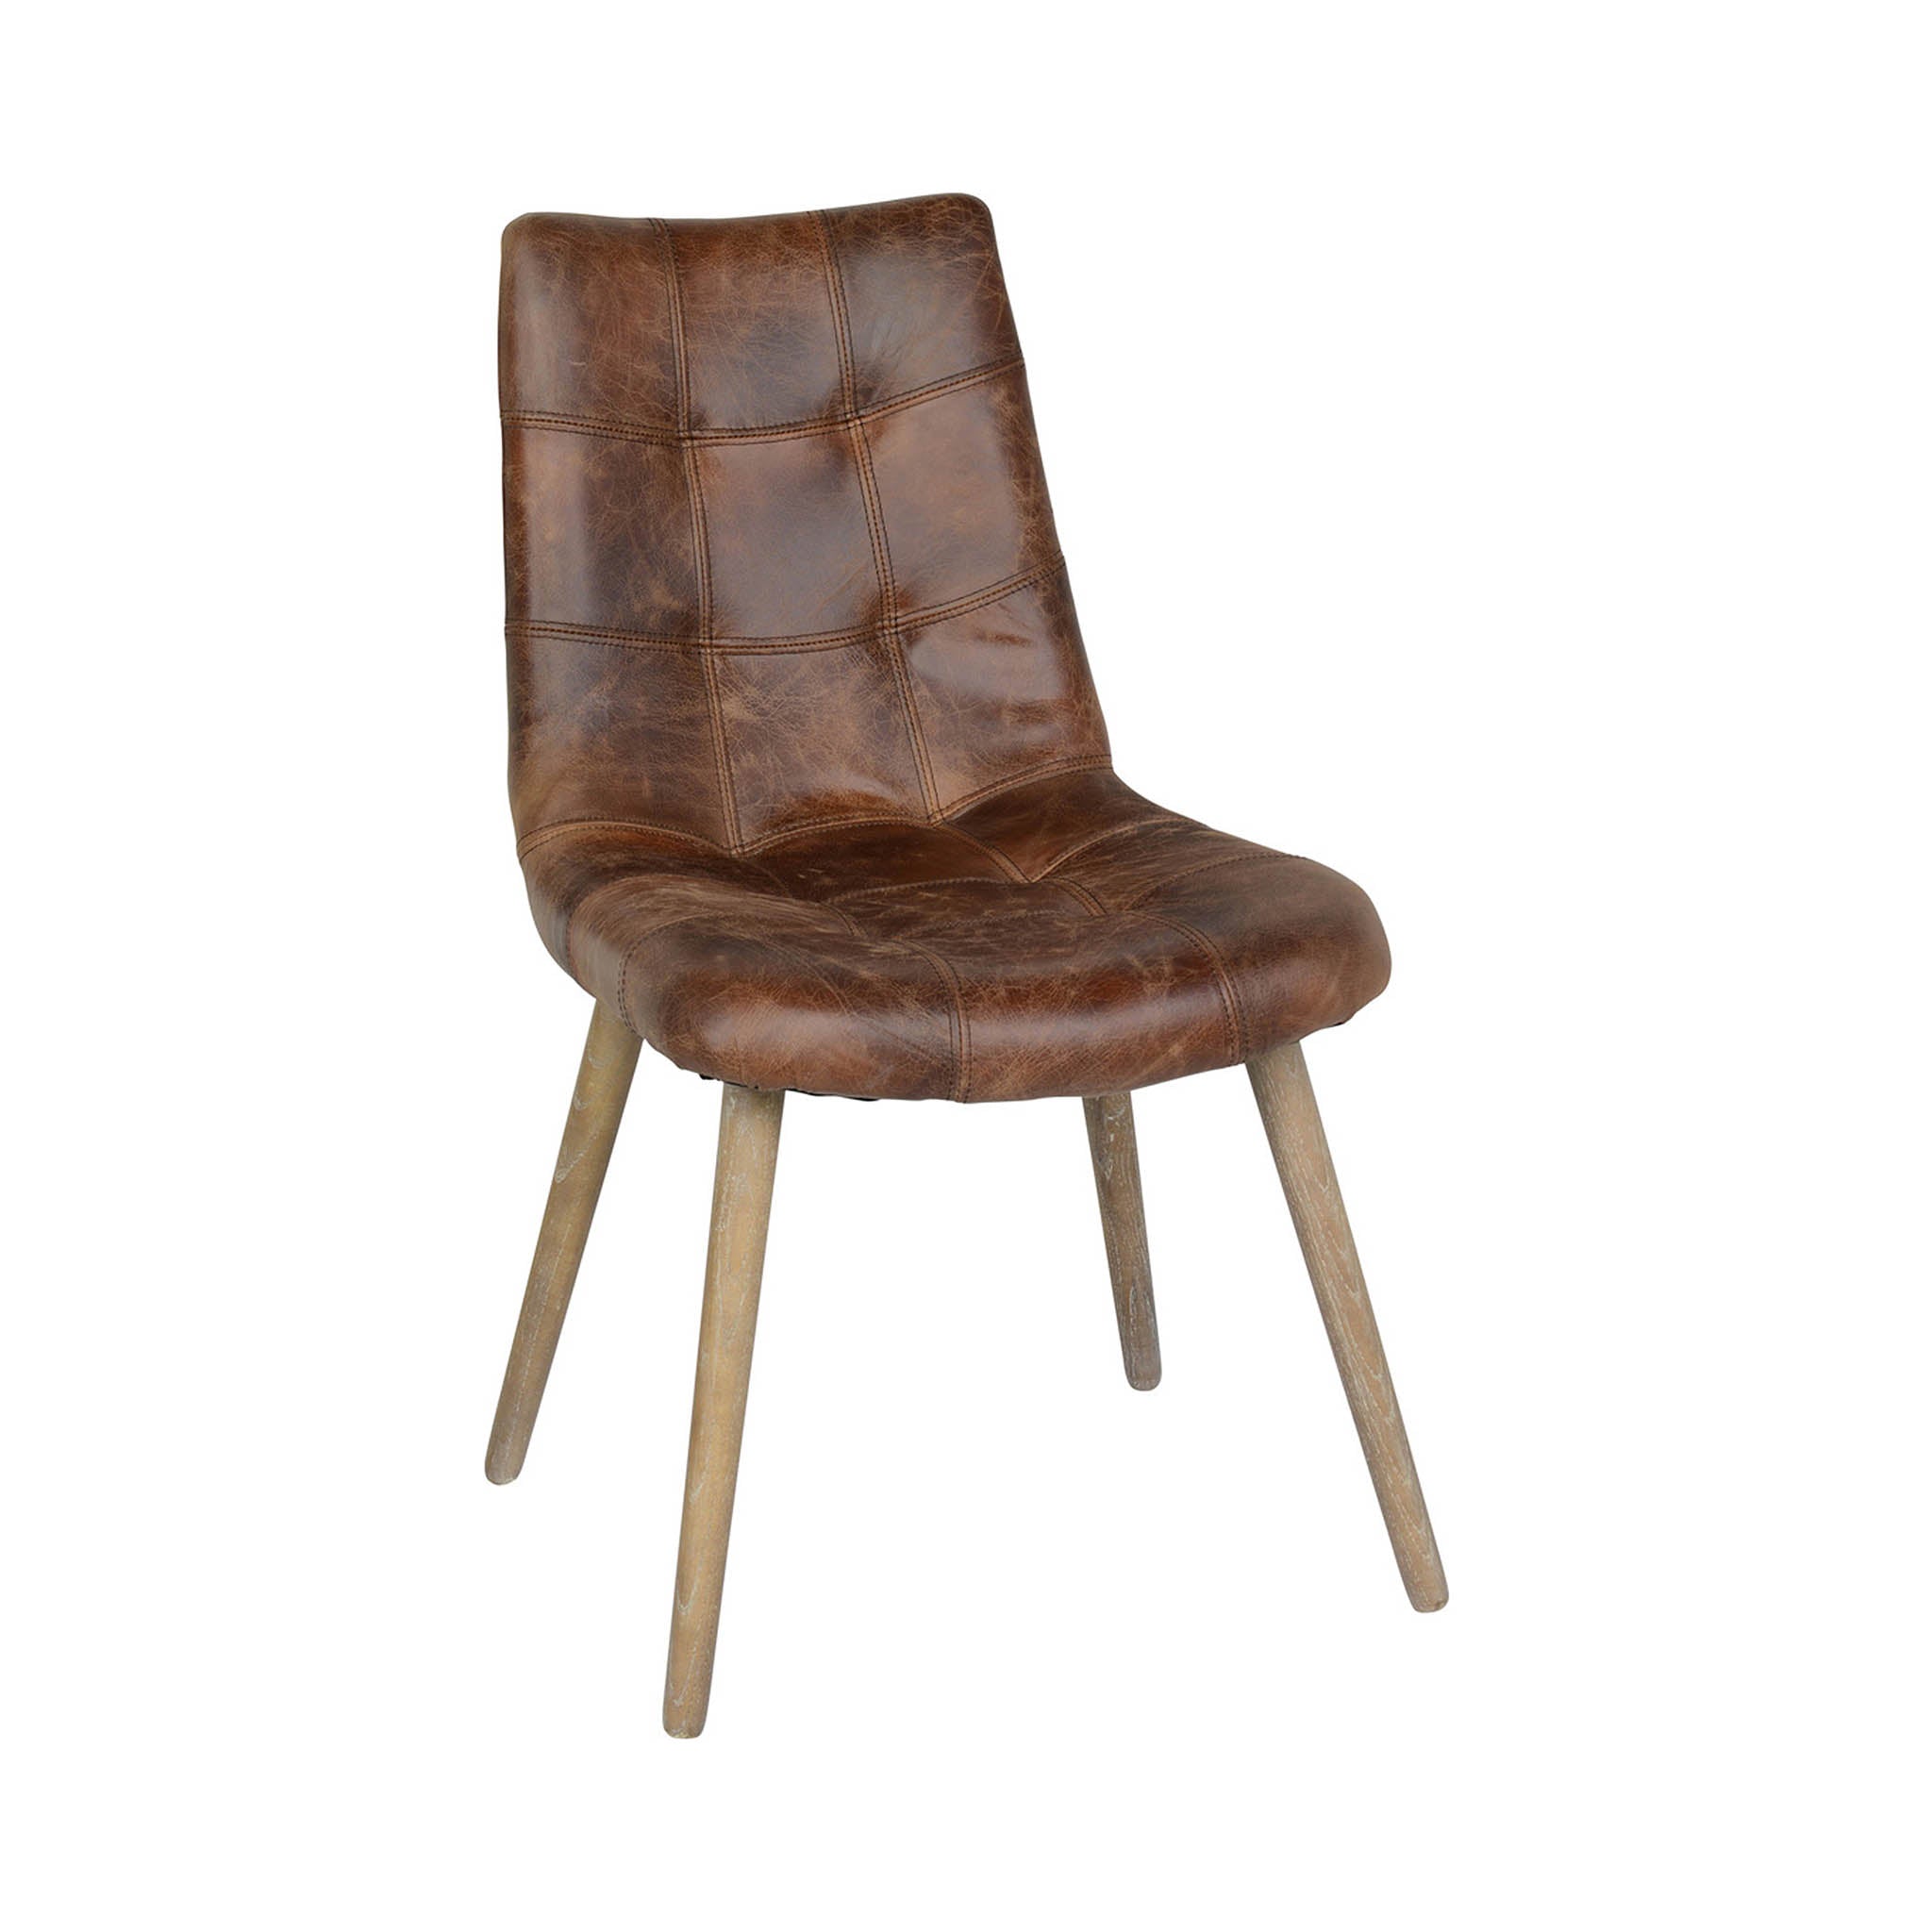 Cordogan Upholstered Dining Chair, Chestnut